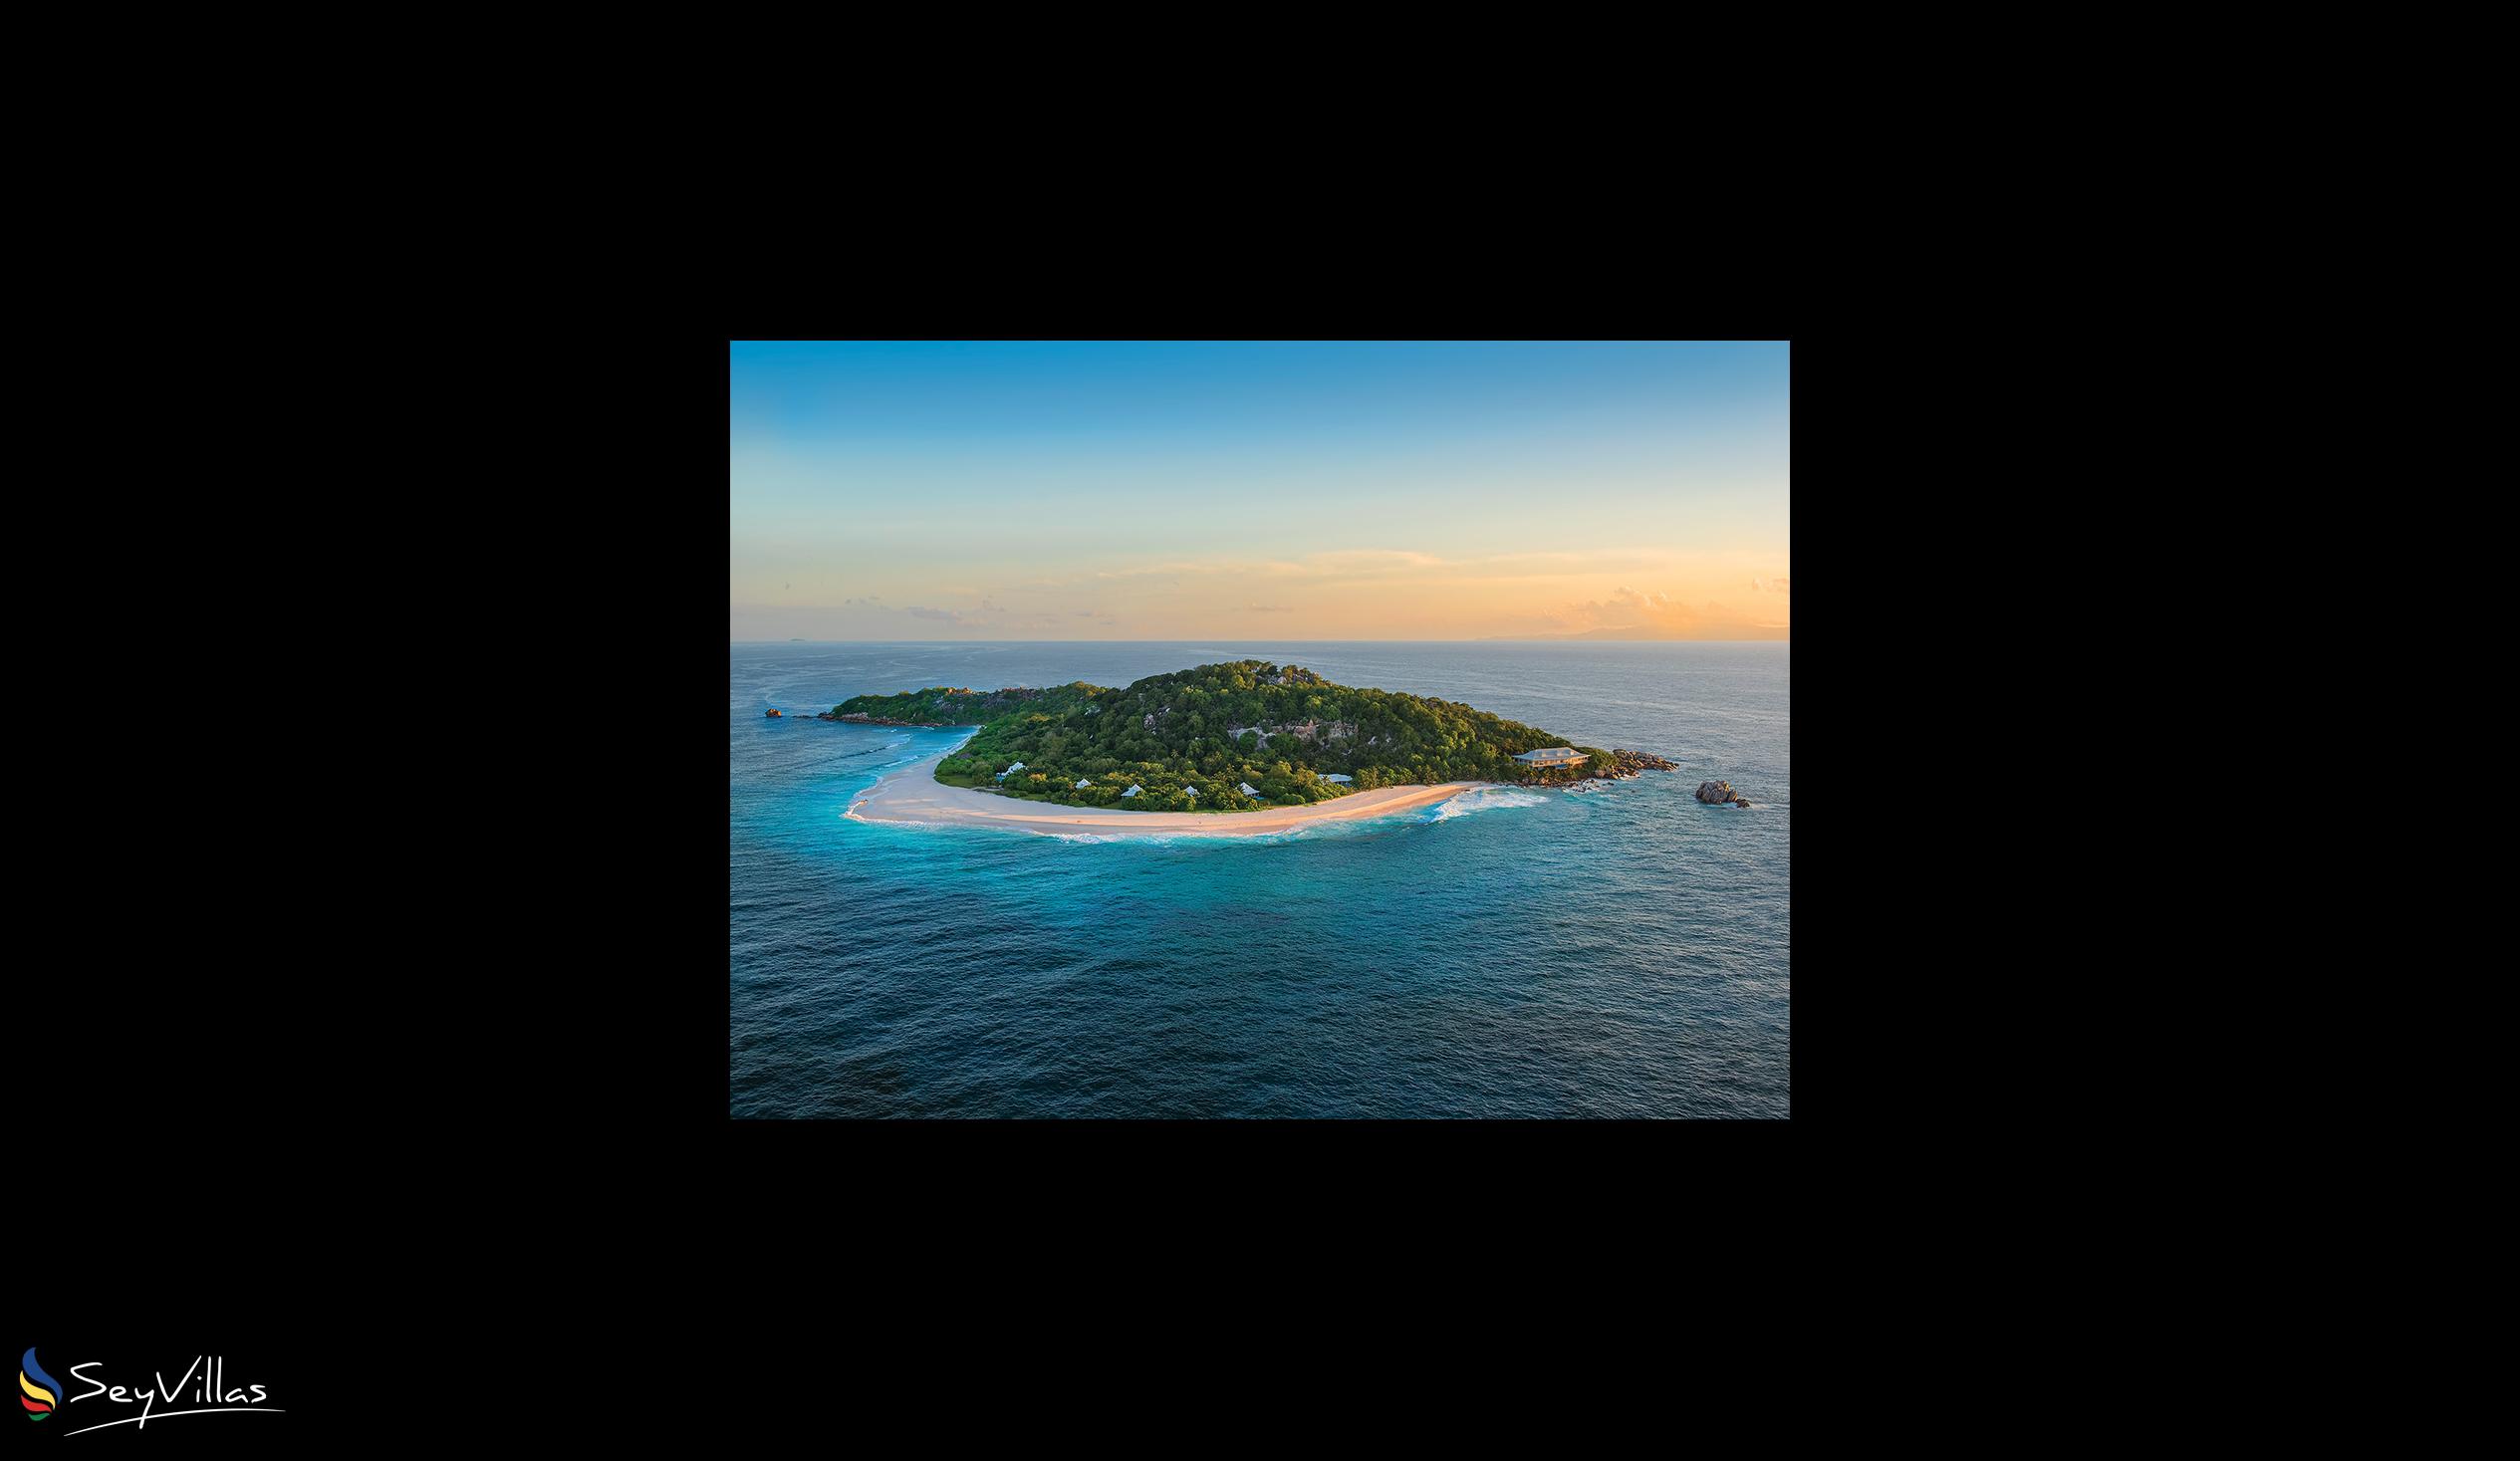 Photo 19: Cousine Island Seychelles - Outdoor area - Cousine Island (Seychelles)